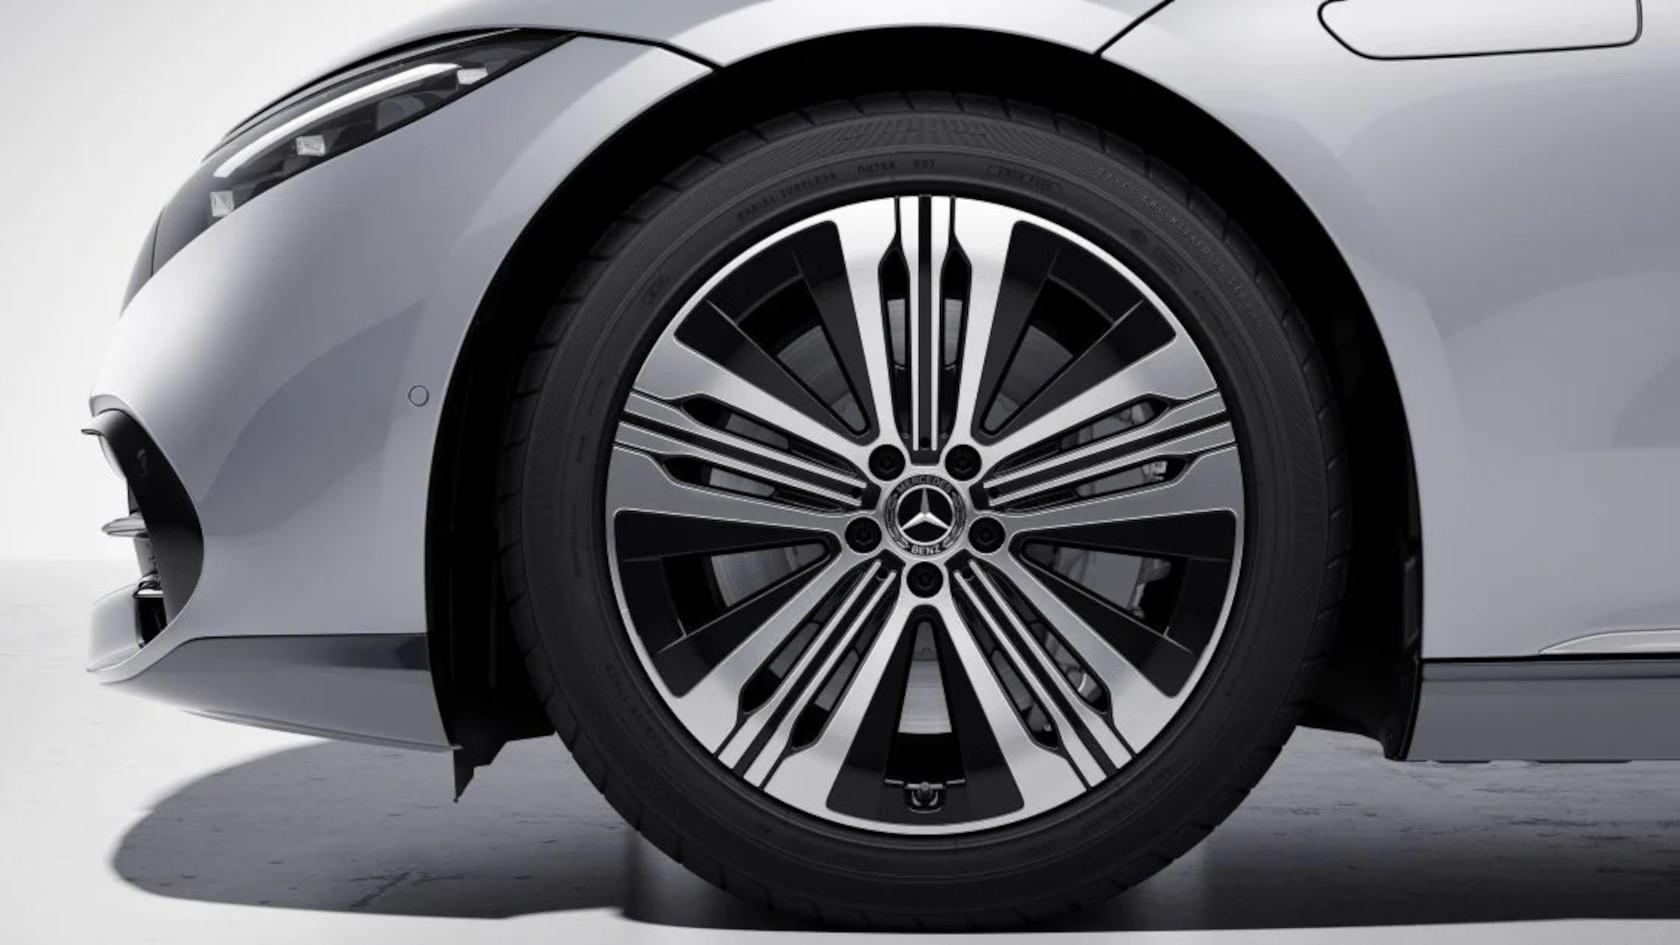 Mercedes-Benz EQB - 5-twin spoke light-alloy wheels